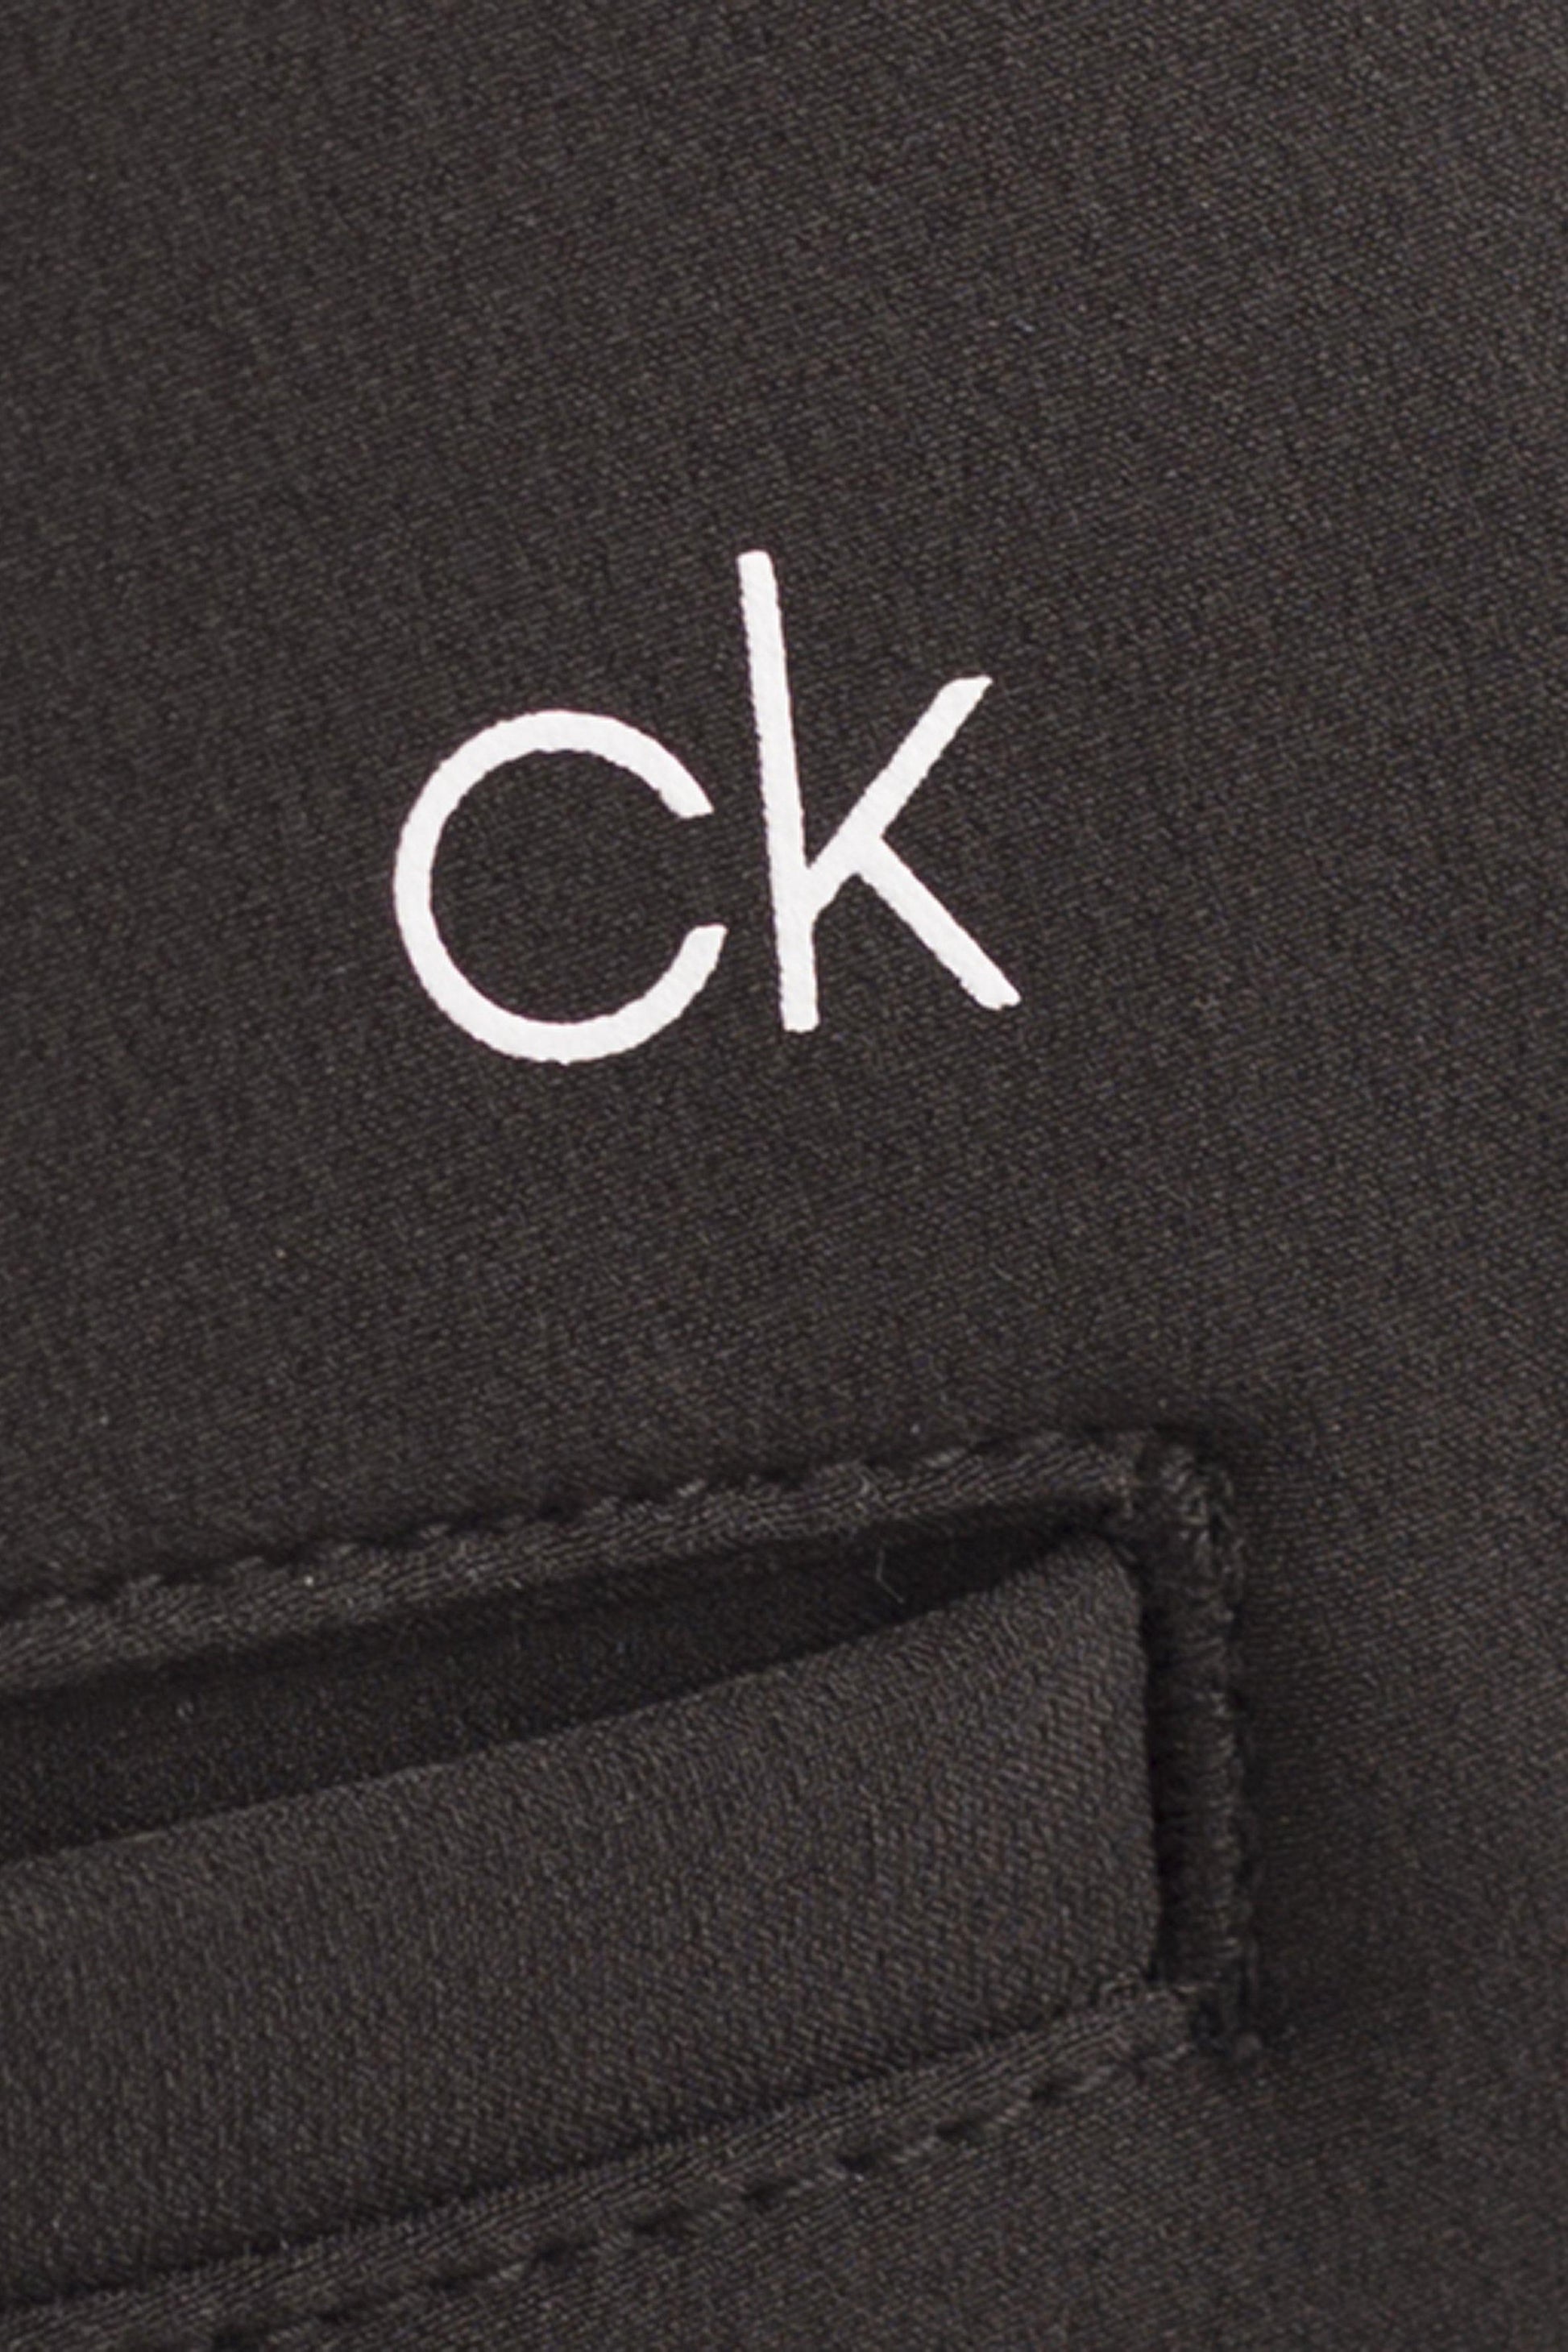 Calvin Klein Genius 4-Way Stretch Trousers - Black